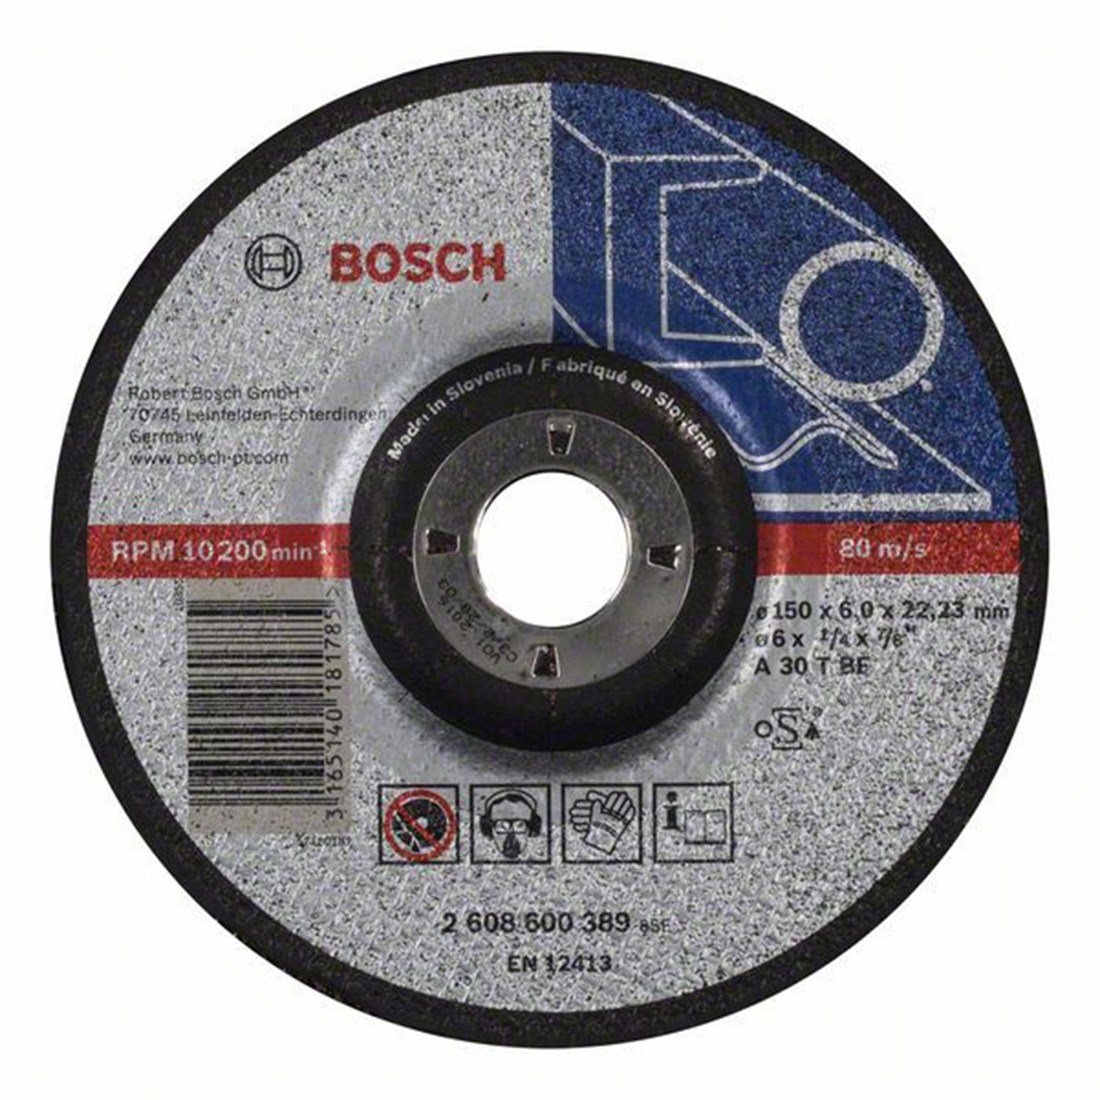 Bosch EX Metal Taşlama Taşı 150*6,0 mm - 2608600389 - 7Kat